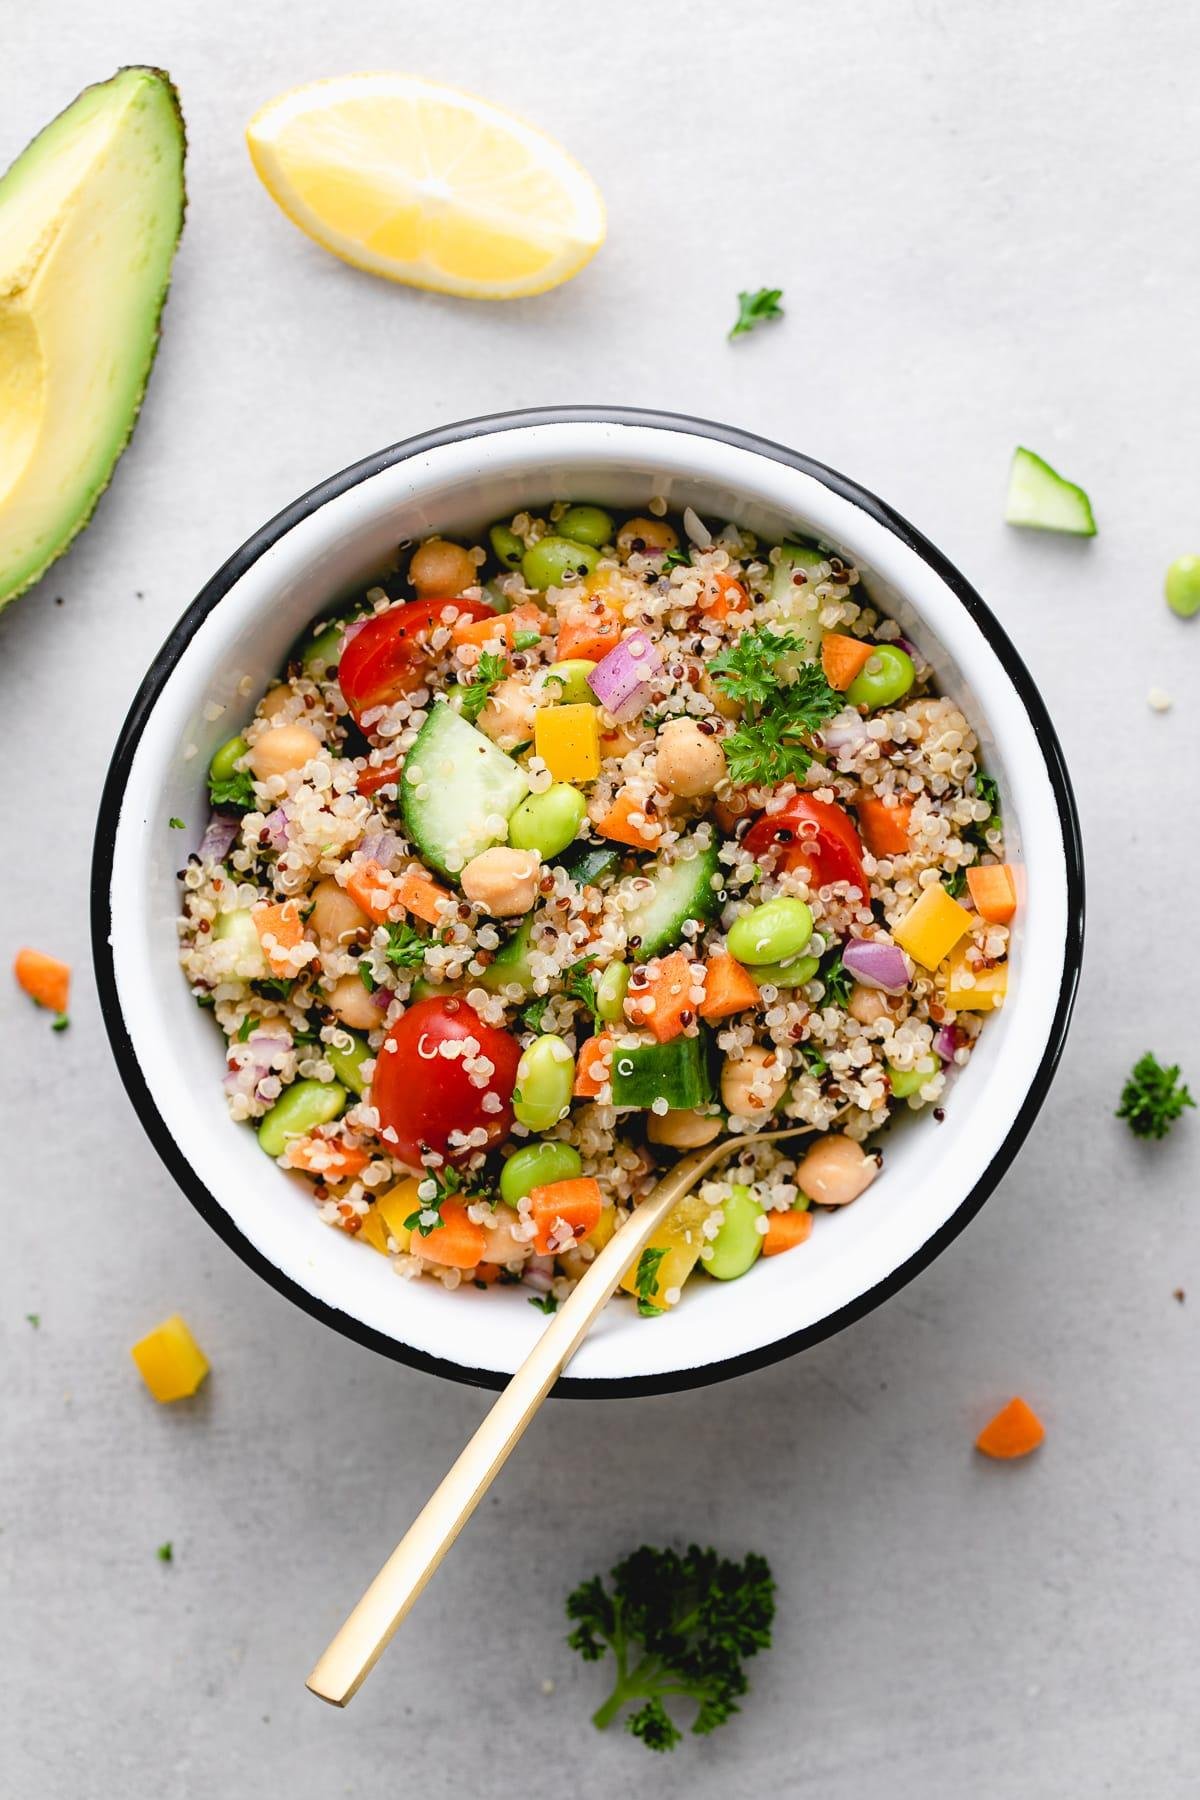 10-Minute Vegan Quinoa Salad Recipe - A Quick and Easy Lunch Idea!